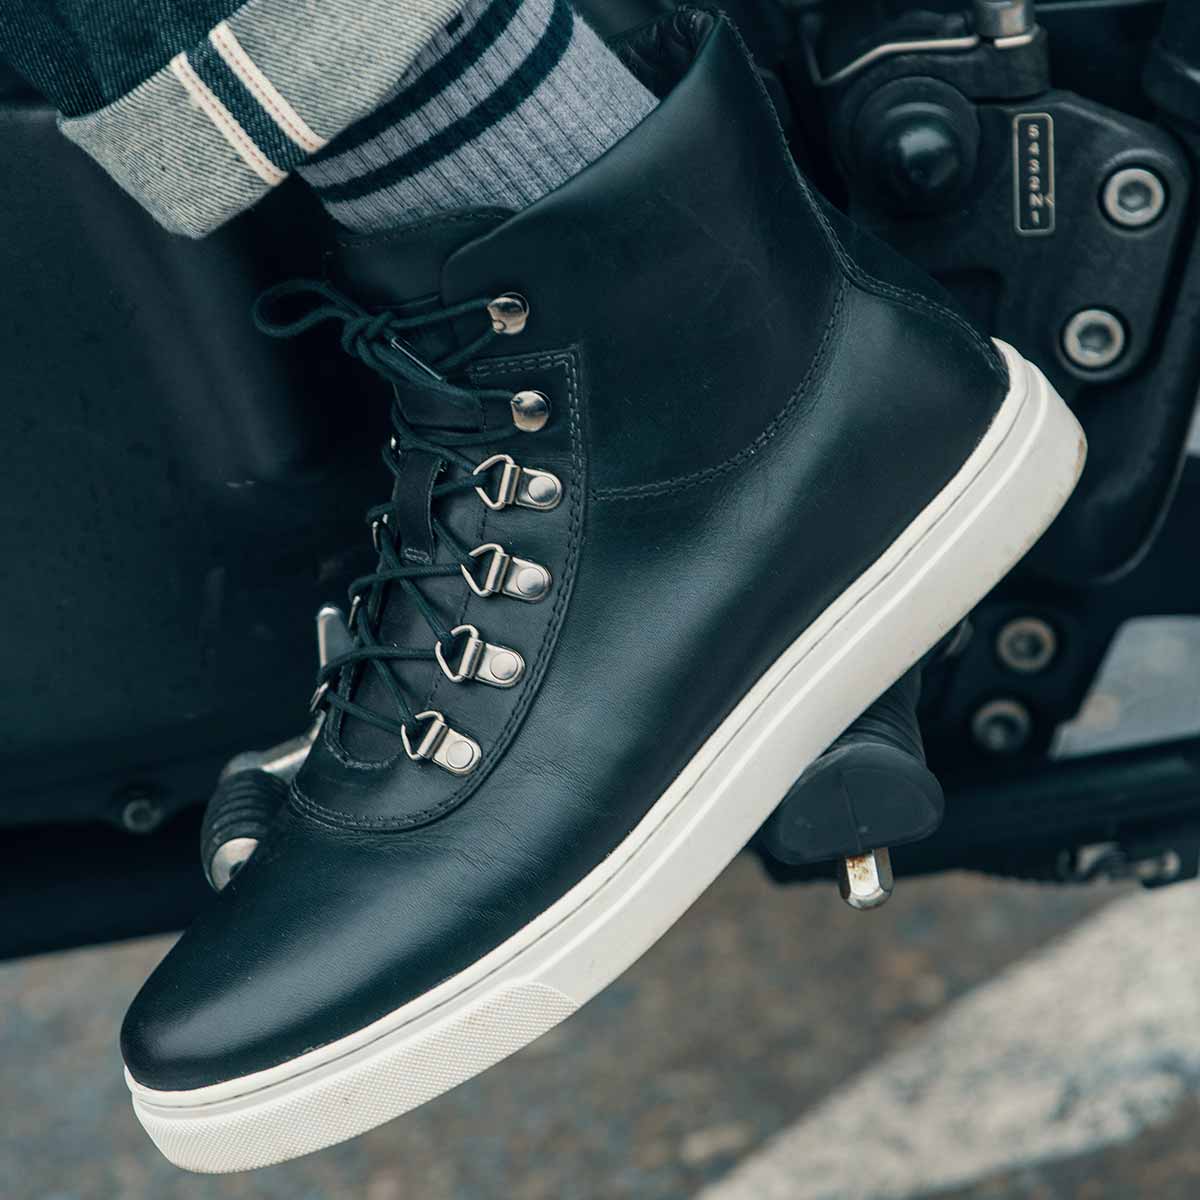 Men’s size 14 Helm THE CHARLIE Sneaker Boots Triple Black - Brazil